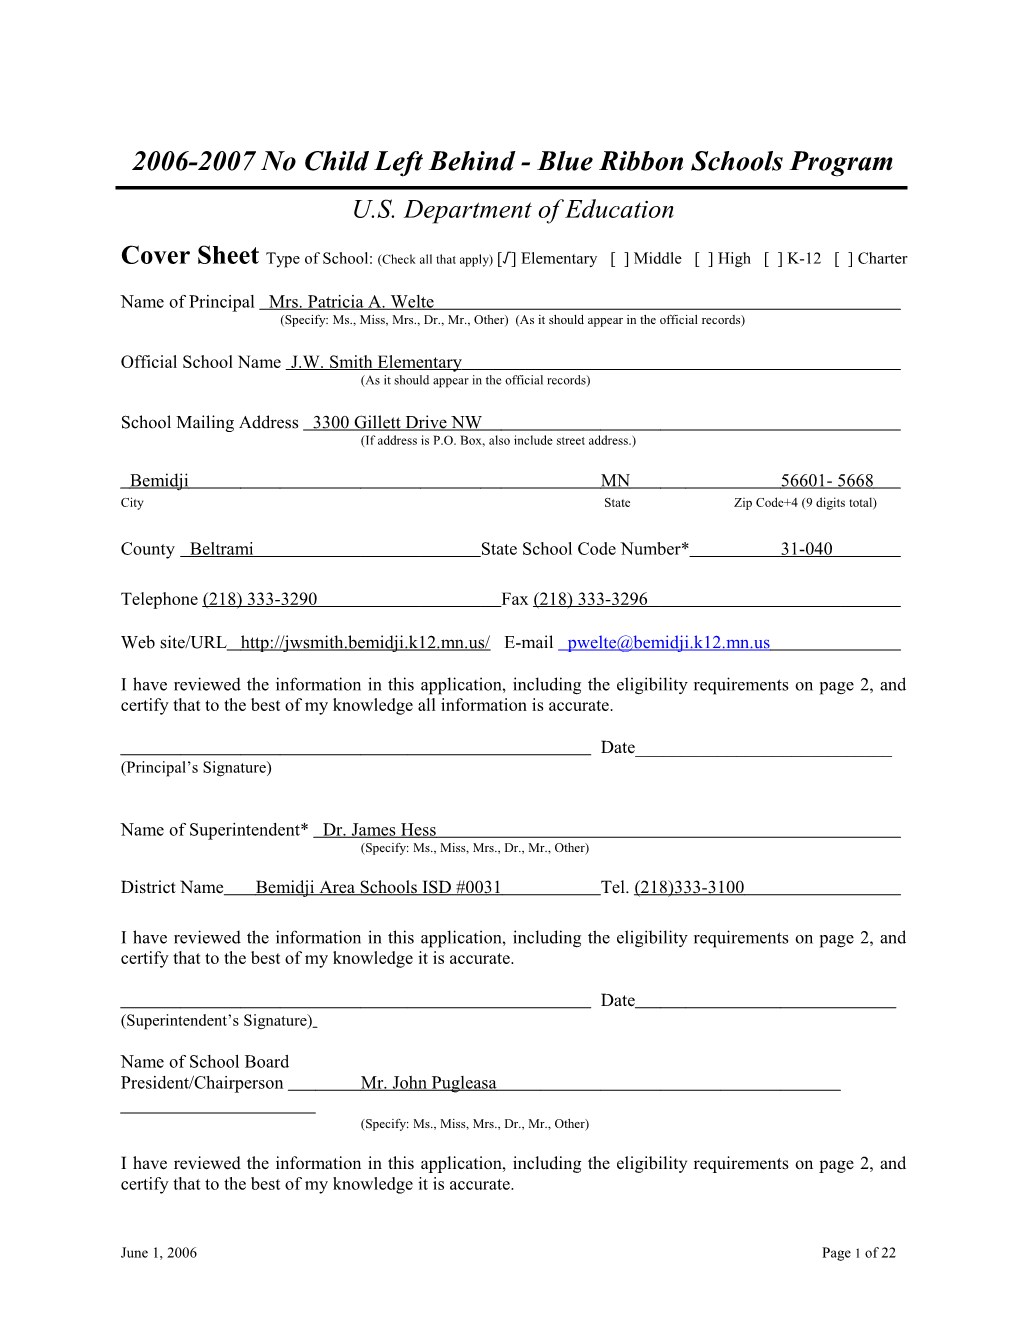 Application: 2006-2007, No Child Left Behind - Blue Ribbon Schools Program (MS Word) s12